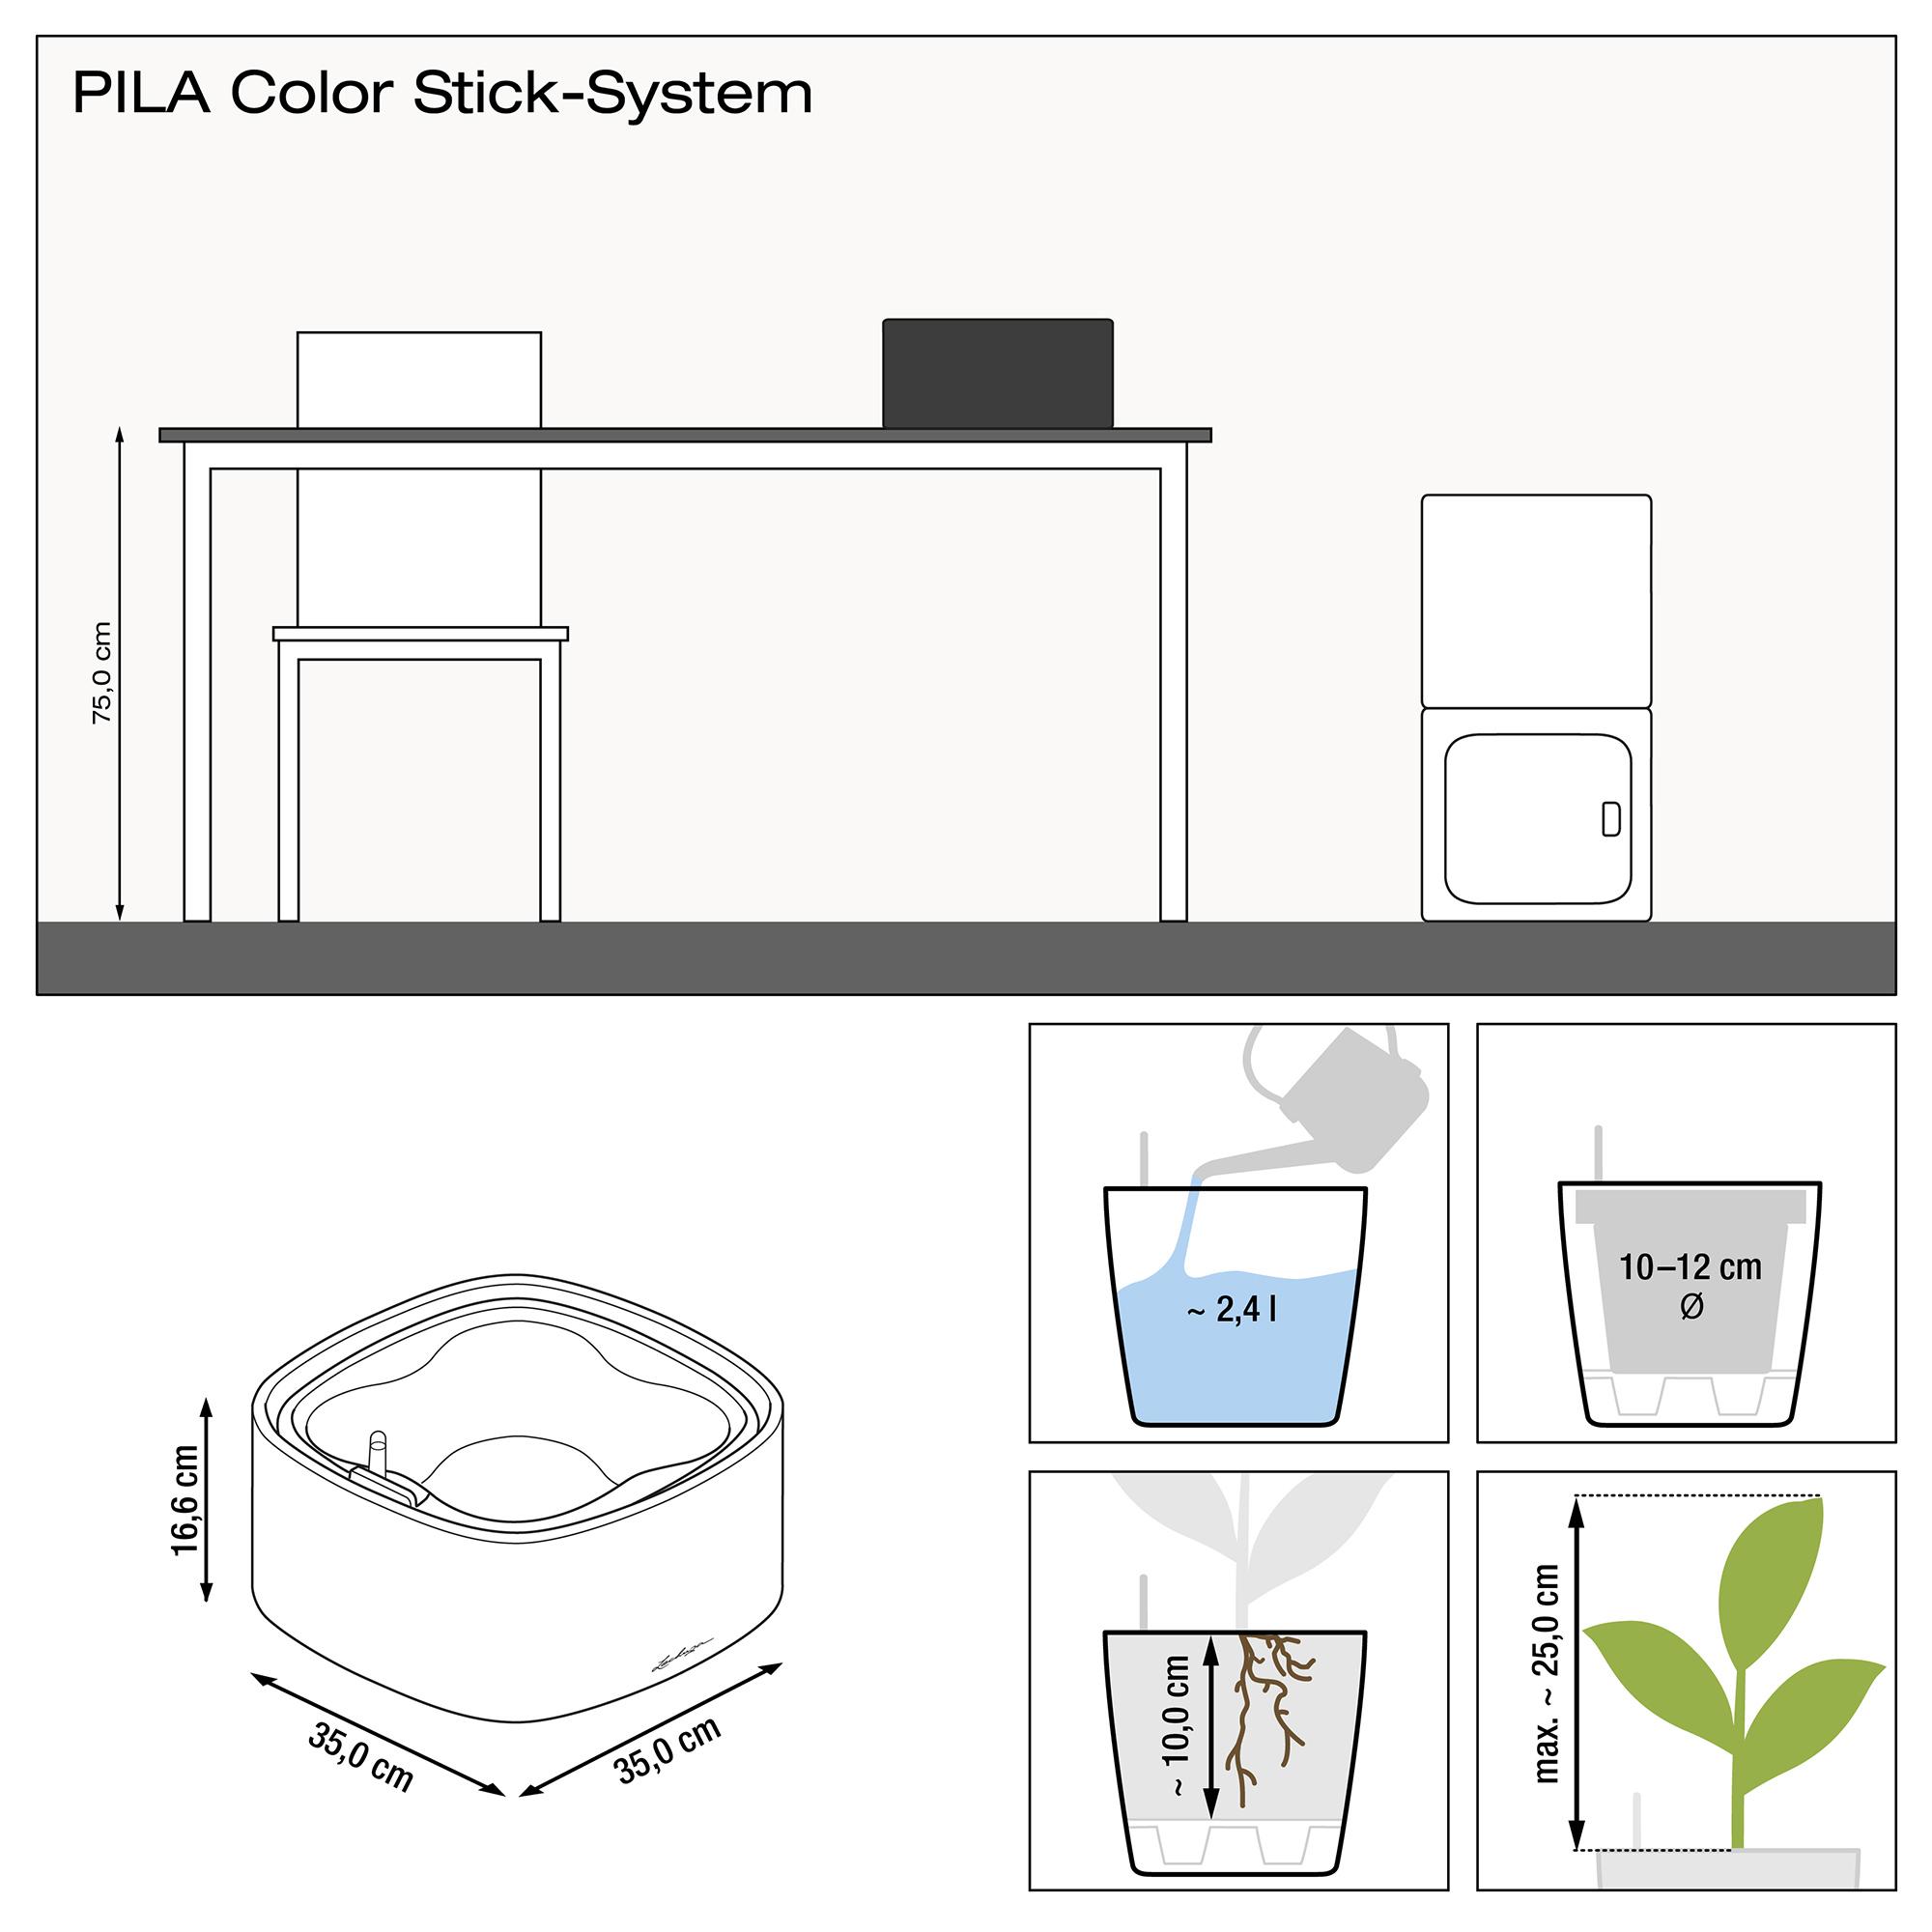 le_pila-color-stick35_product_addi_nz